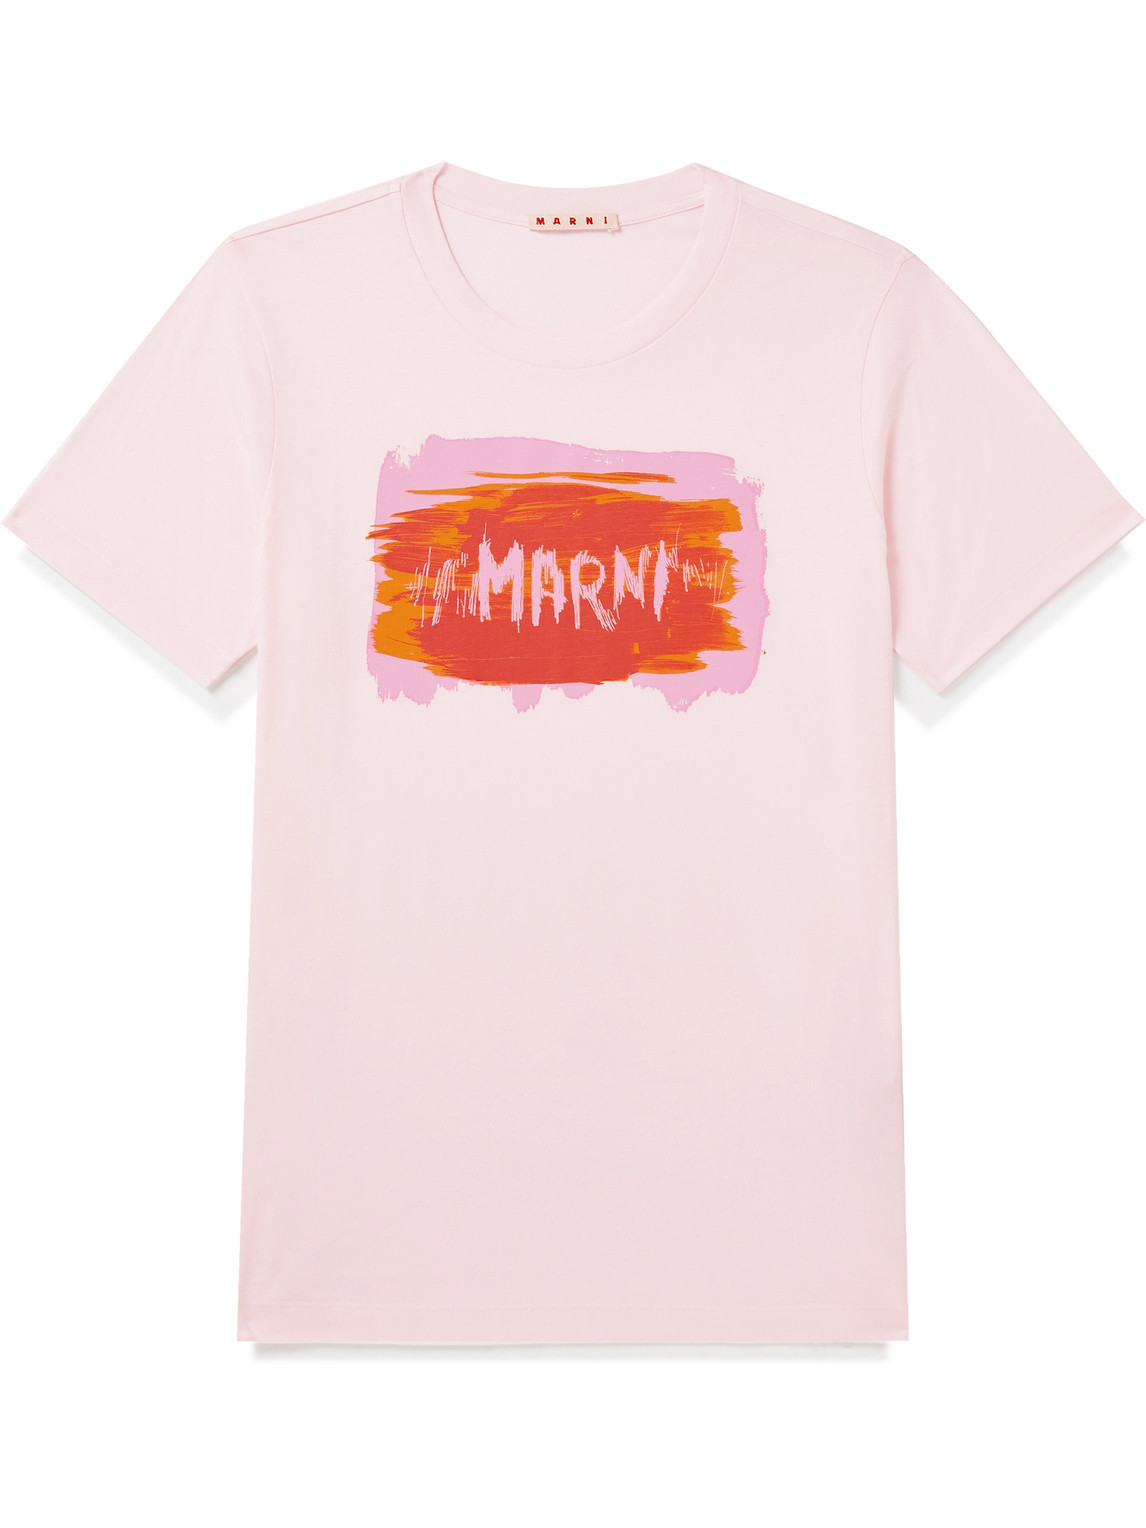 Marni Slim-Fit Logo-Print Cotton-Jersey T-Shirt